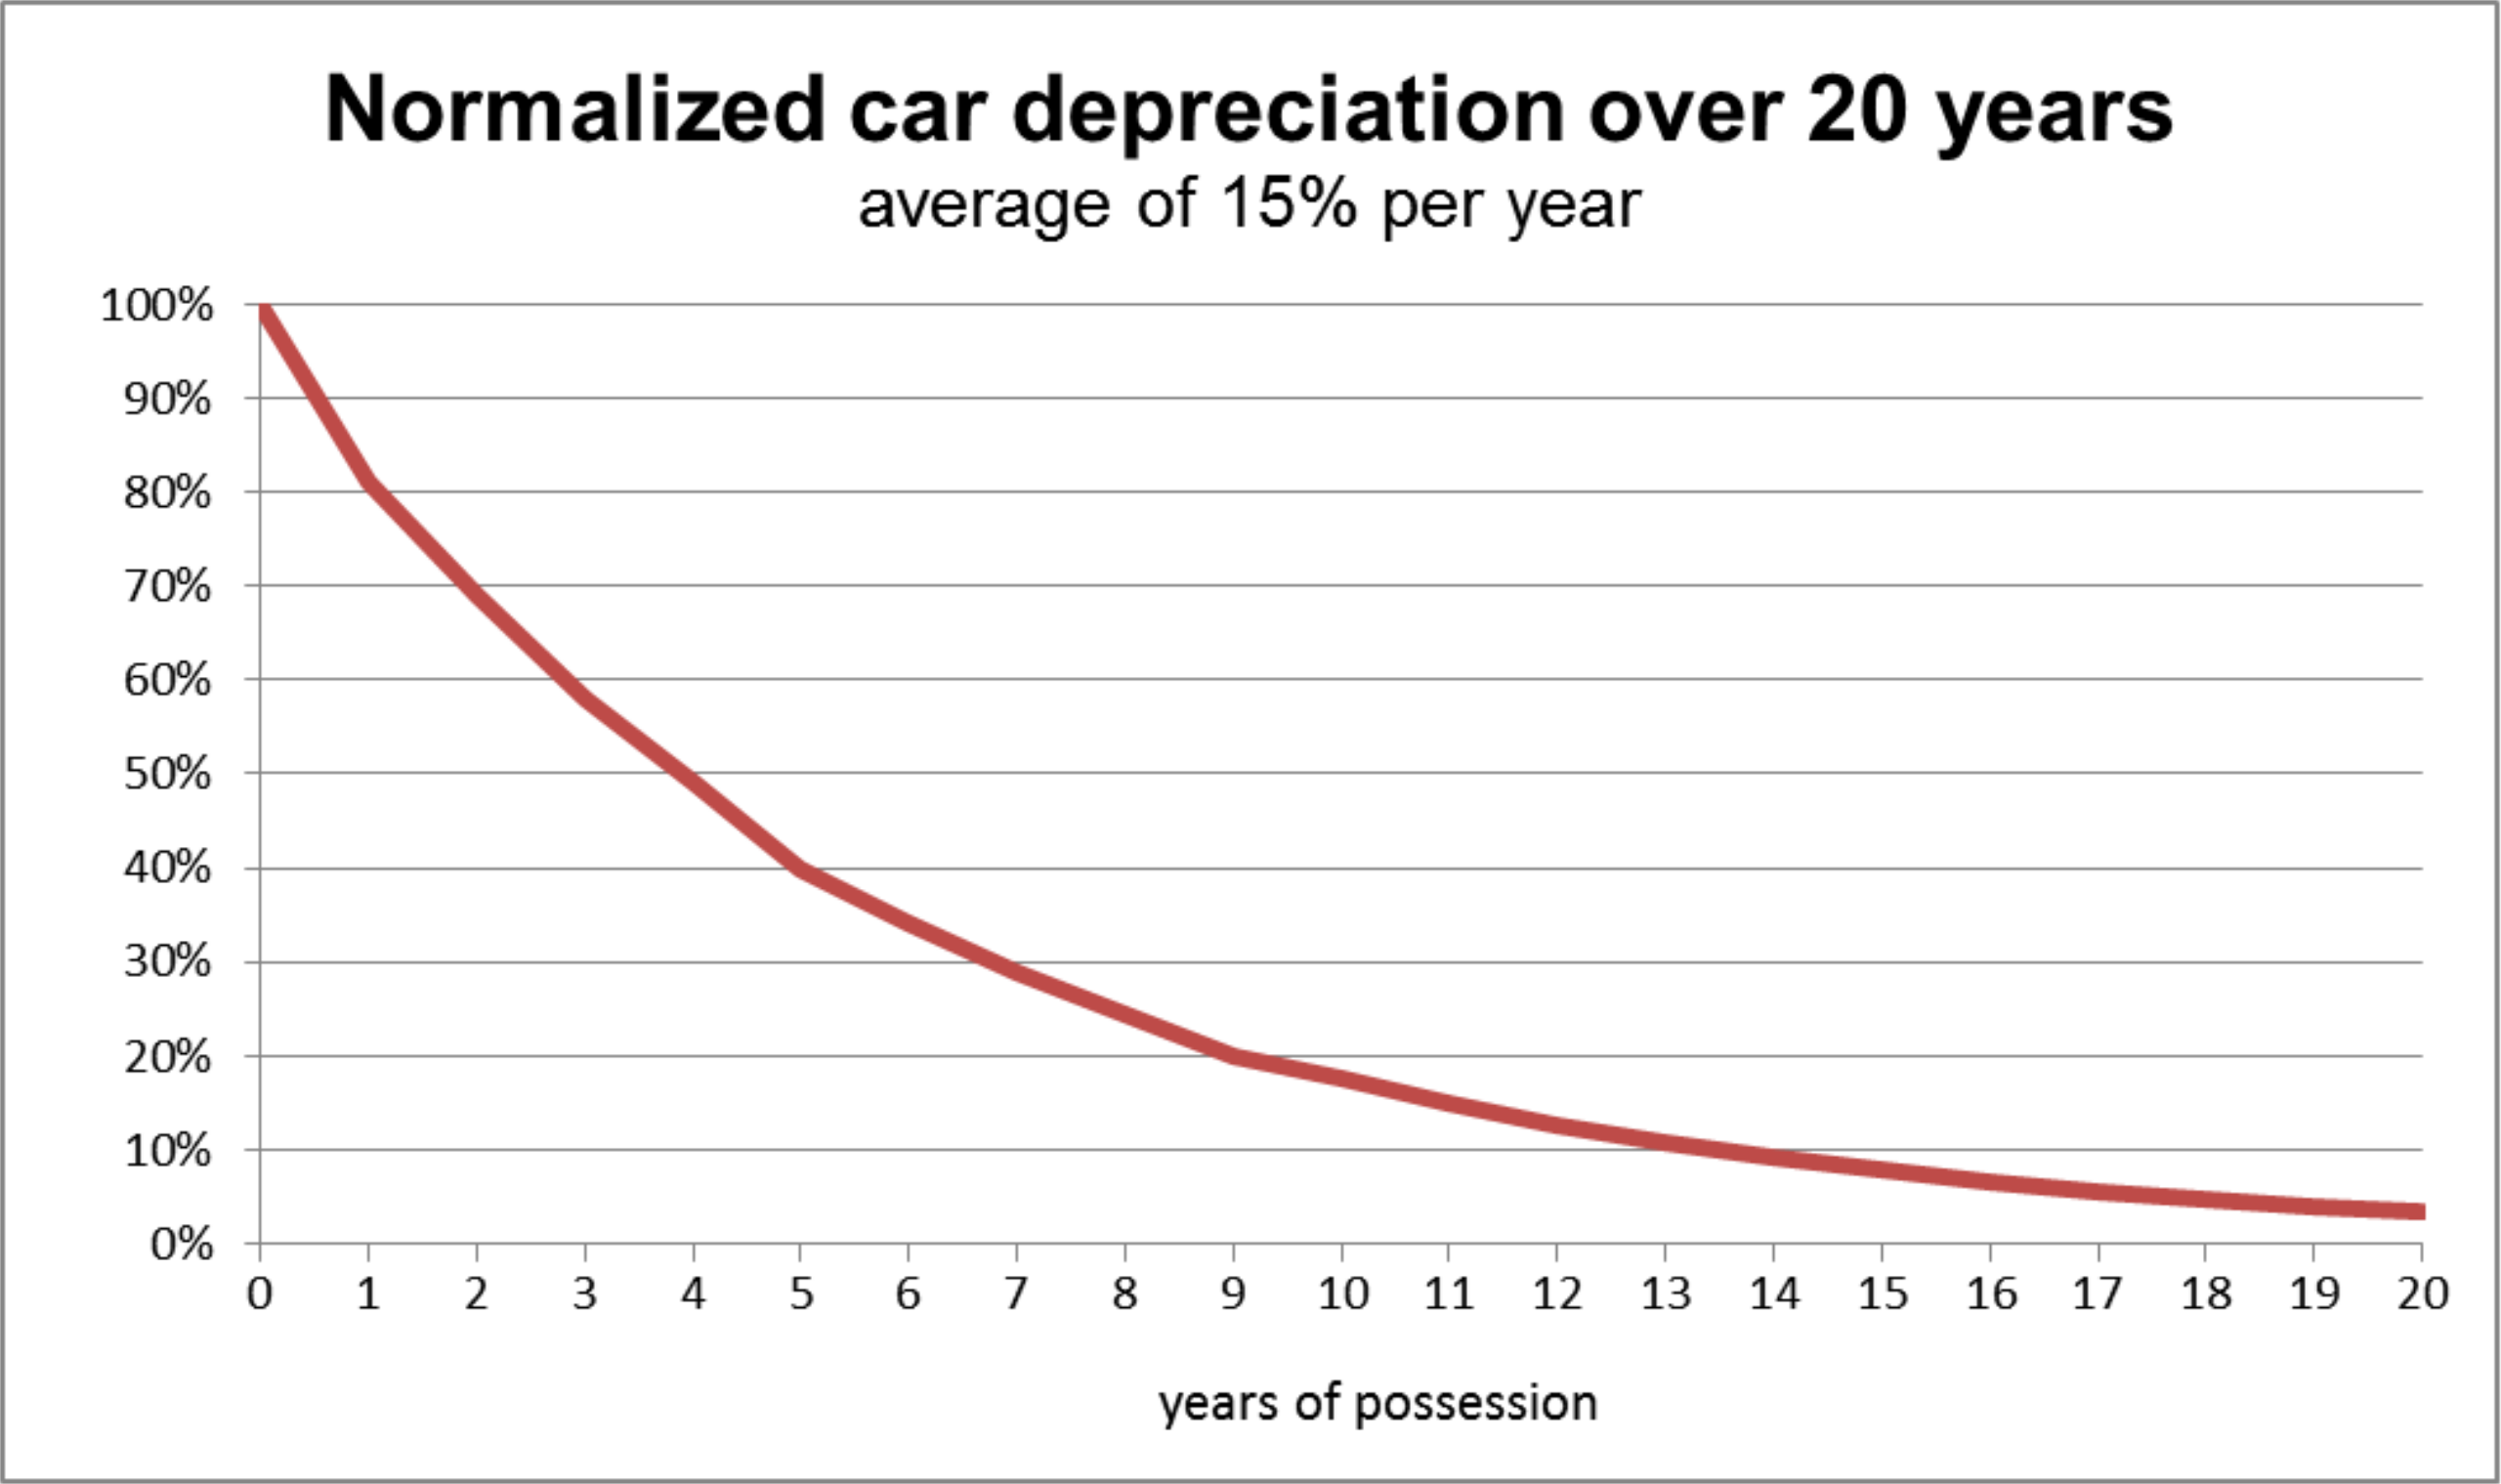 A graph shows an asset depreciation at 15% per year over 20 years. Normalized car depreciation over 20 years